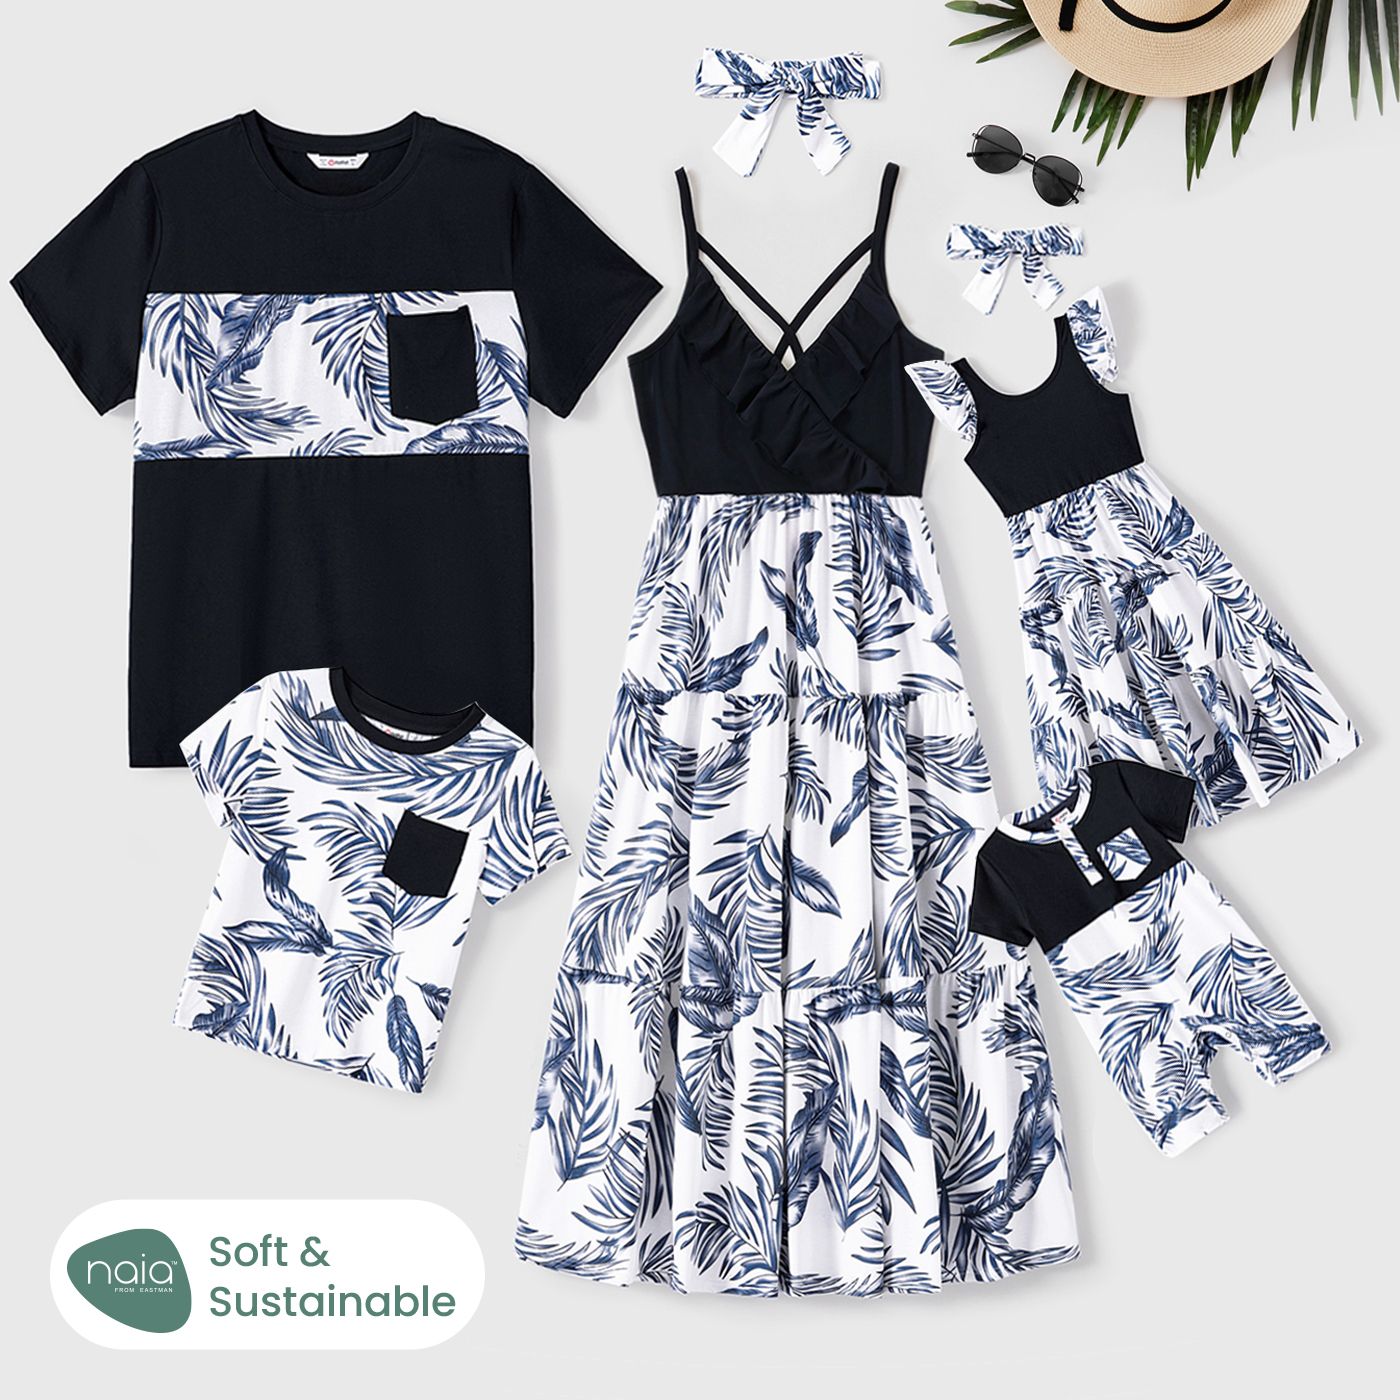 Family Matching Cotton Short-sleeve T-shirt And Plant Print Naiaâ¢ Spliced Ruffle Trim Cami Dresses Sets